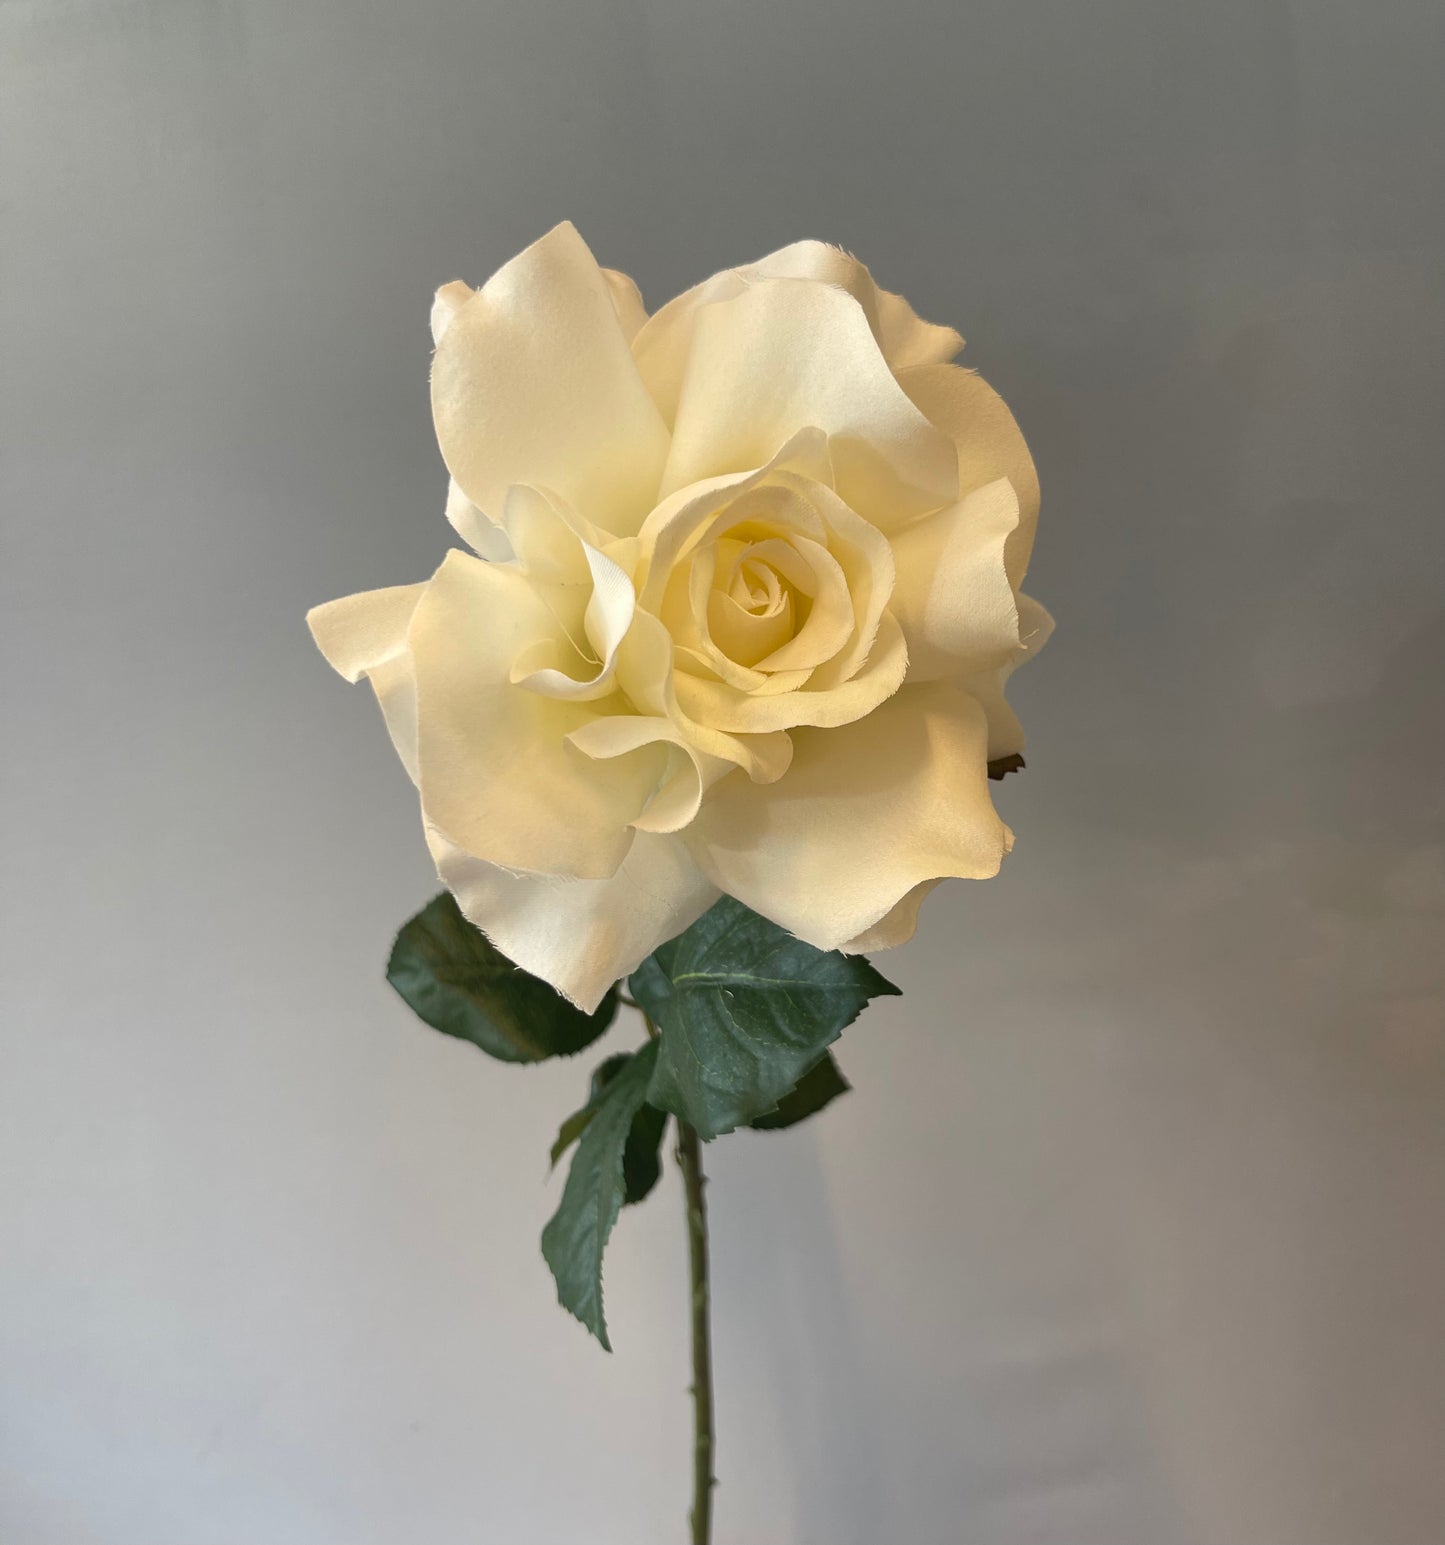 White Gloria Rose Single Stem Artificial Flowers Faux Flowers